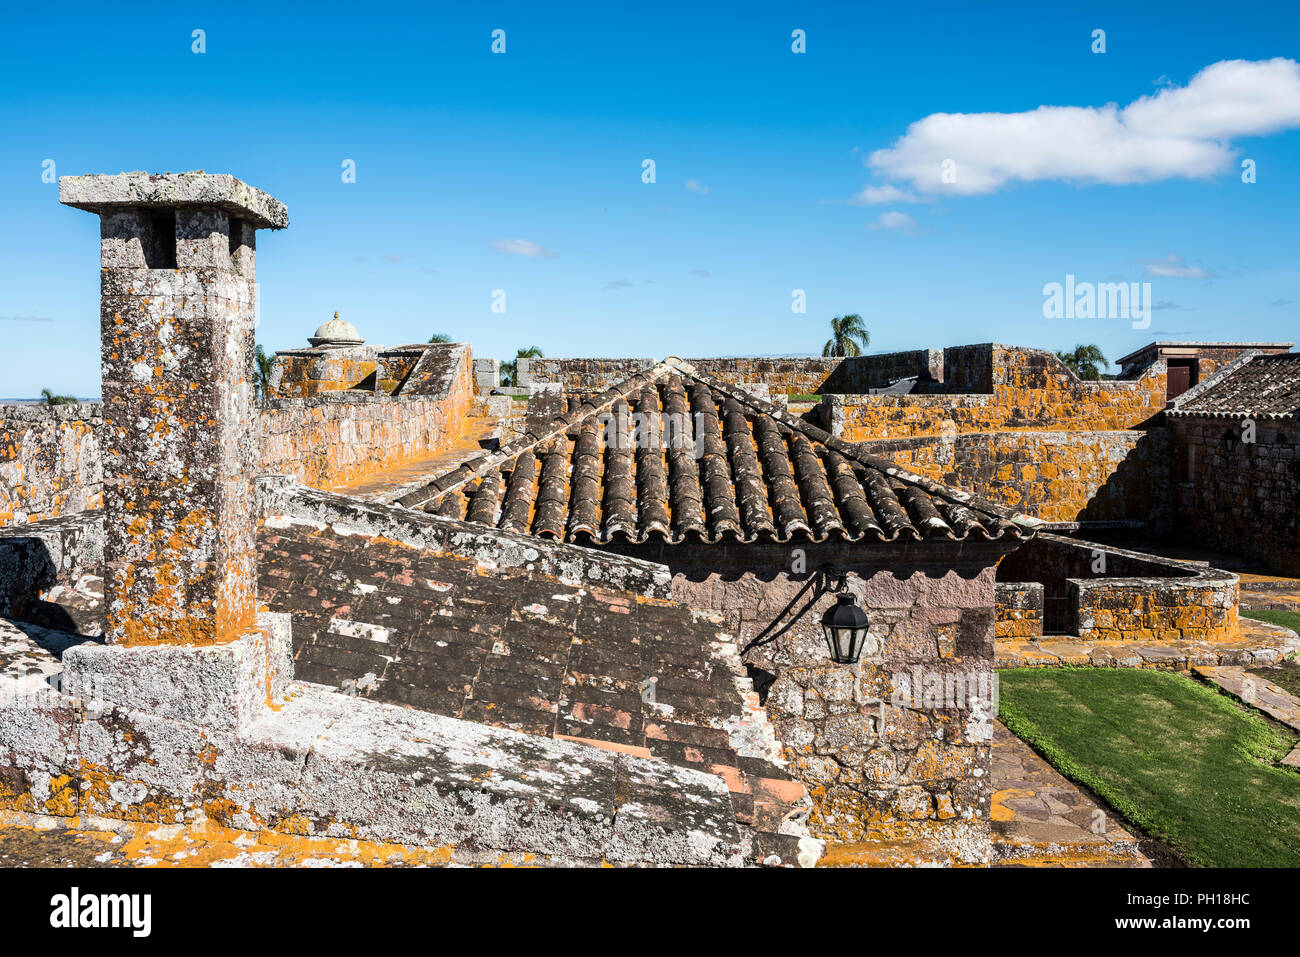 San Miguael fort in Rocha Provinz, in der Nähe der brasilianischen Grenze, Uruguay Stockfoto